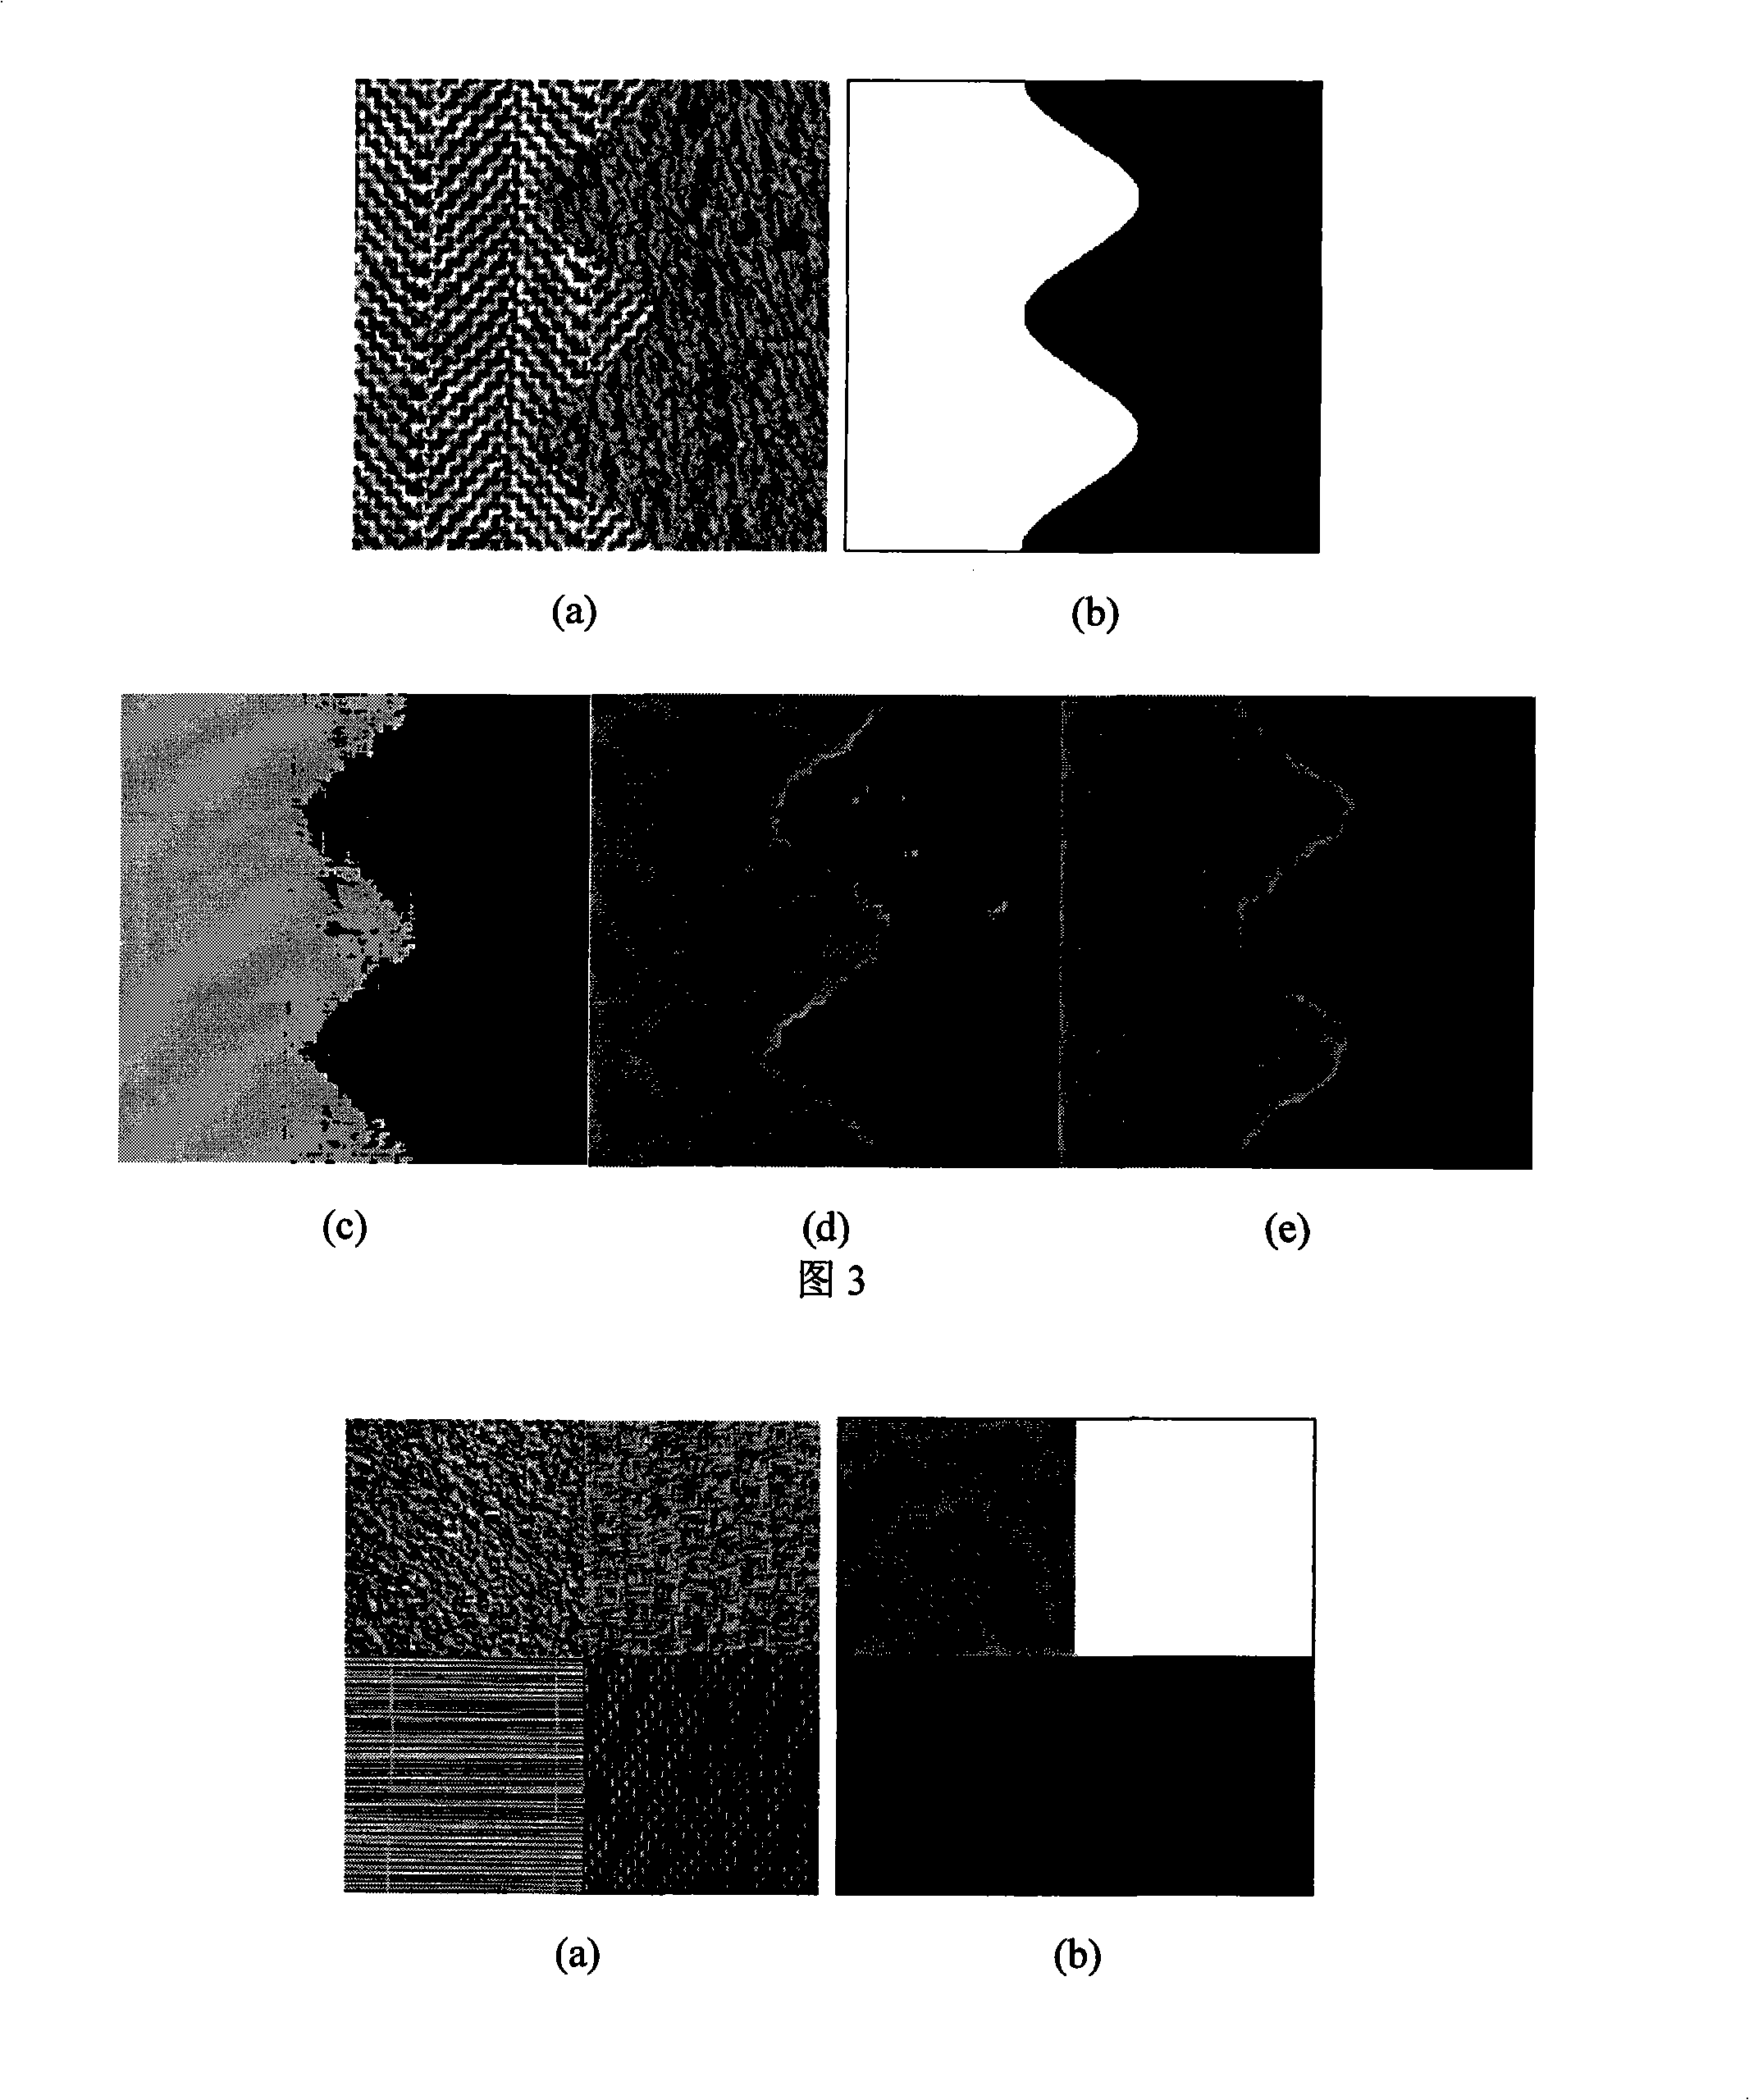 Method of image segmentation based on immune spectrum clustering